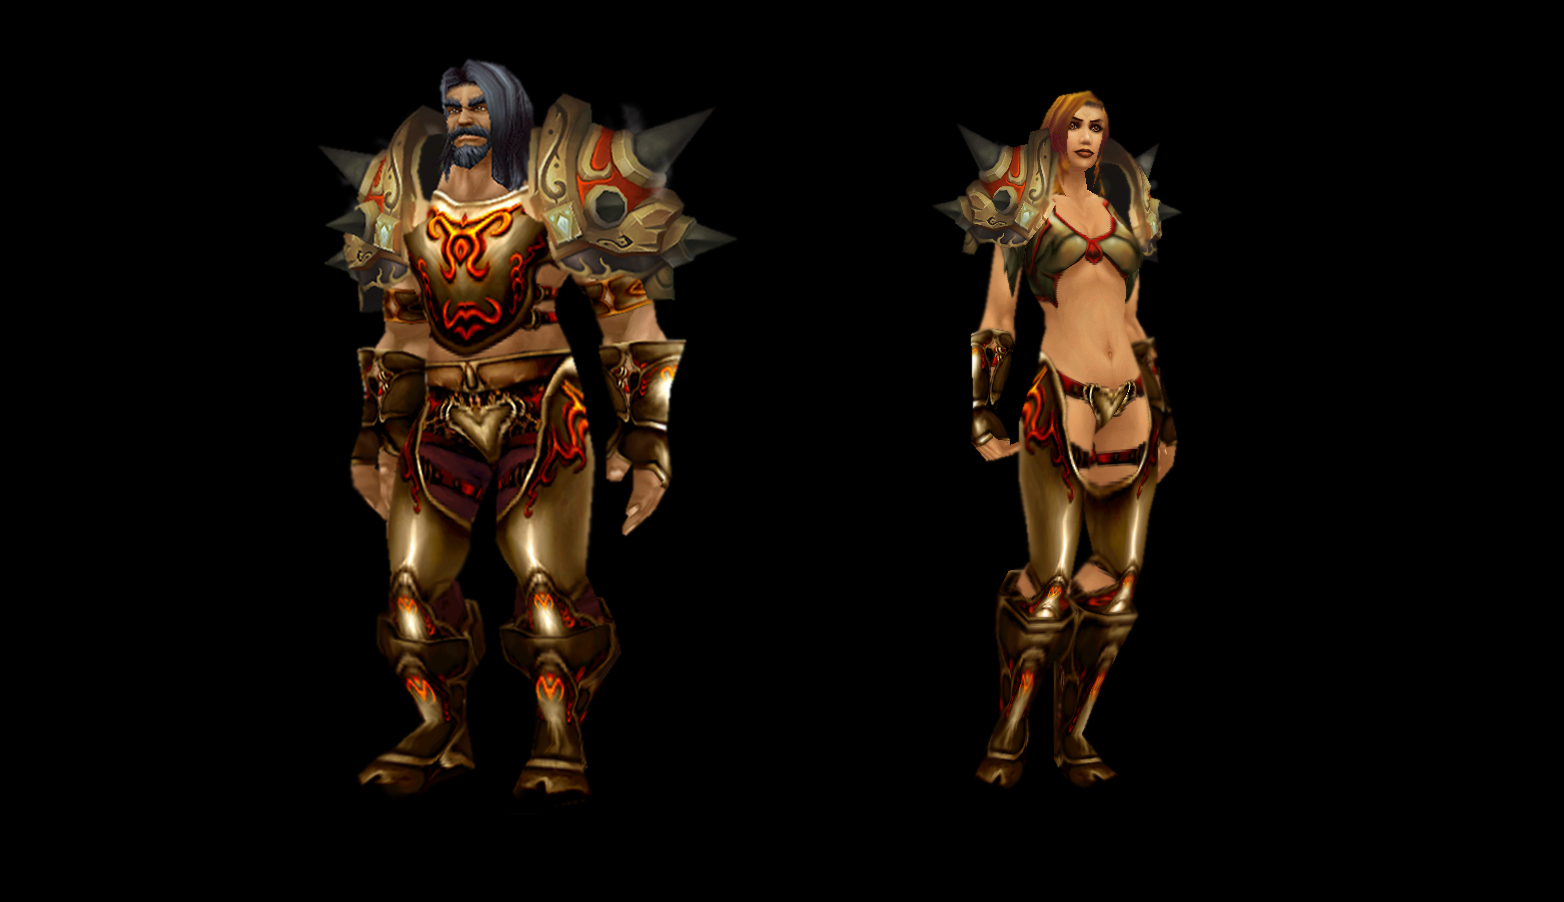 Same armor set (Bloodfist set from World of Warcraft)